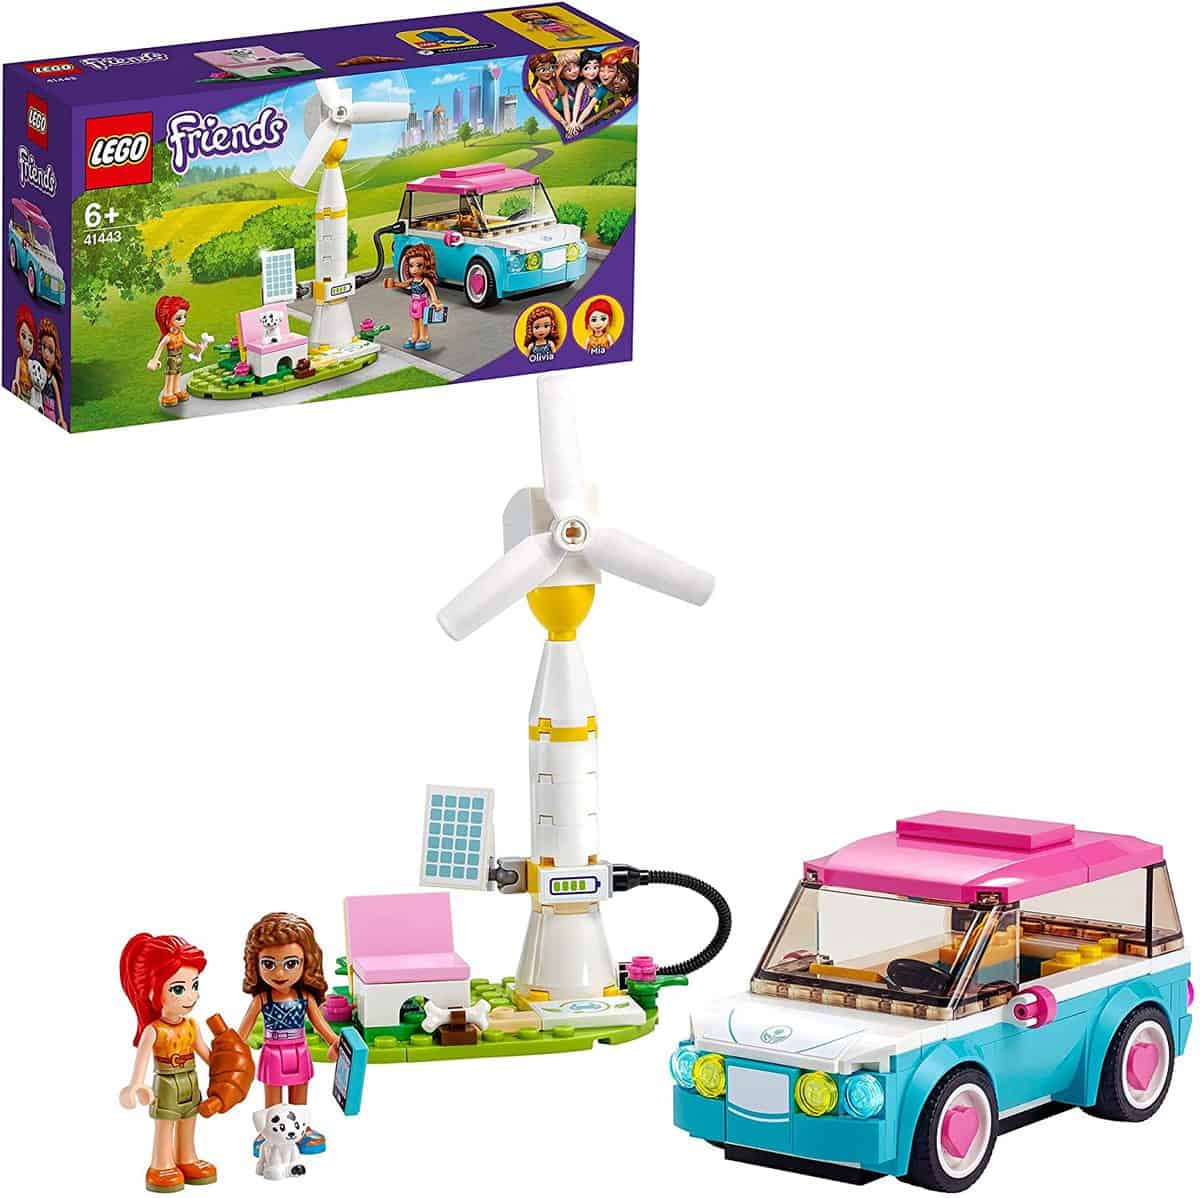 LEGO Friends - Olivias Elektroauto (41443) - für 8,80 € [Prime] statt 12,98 €